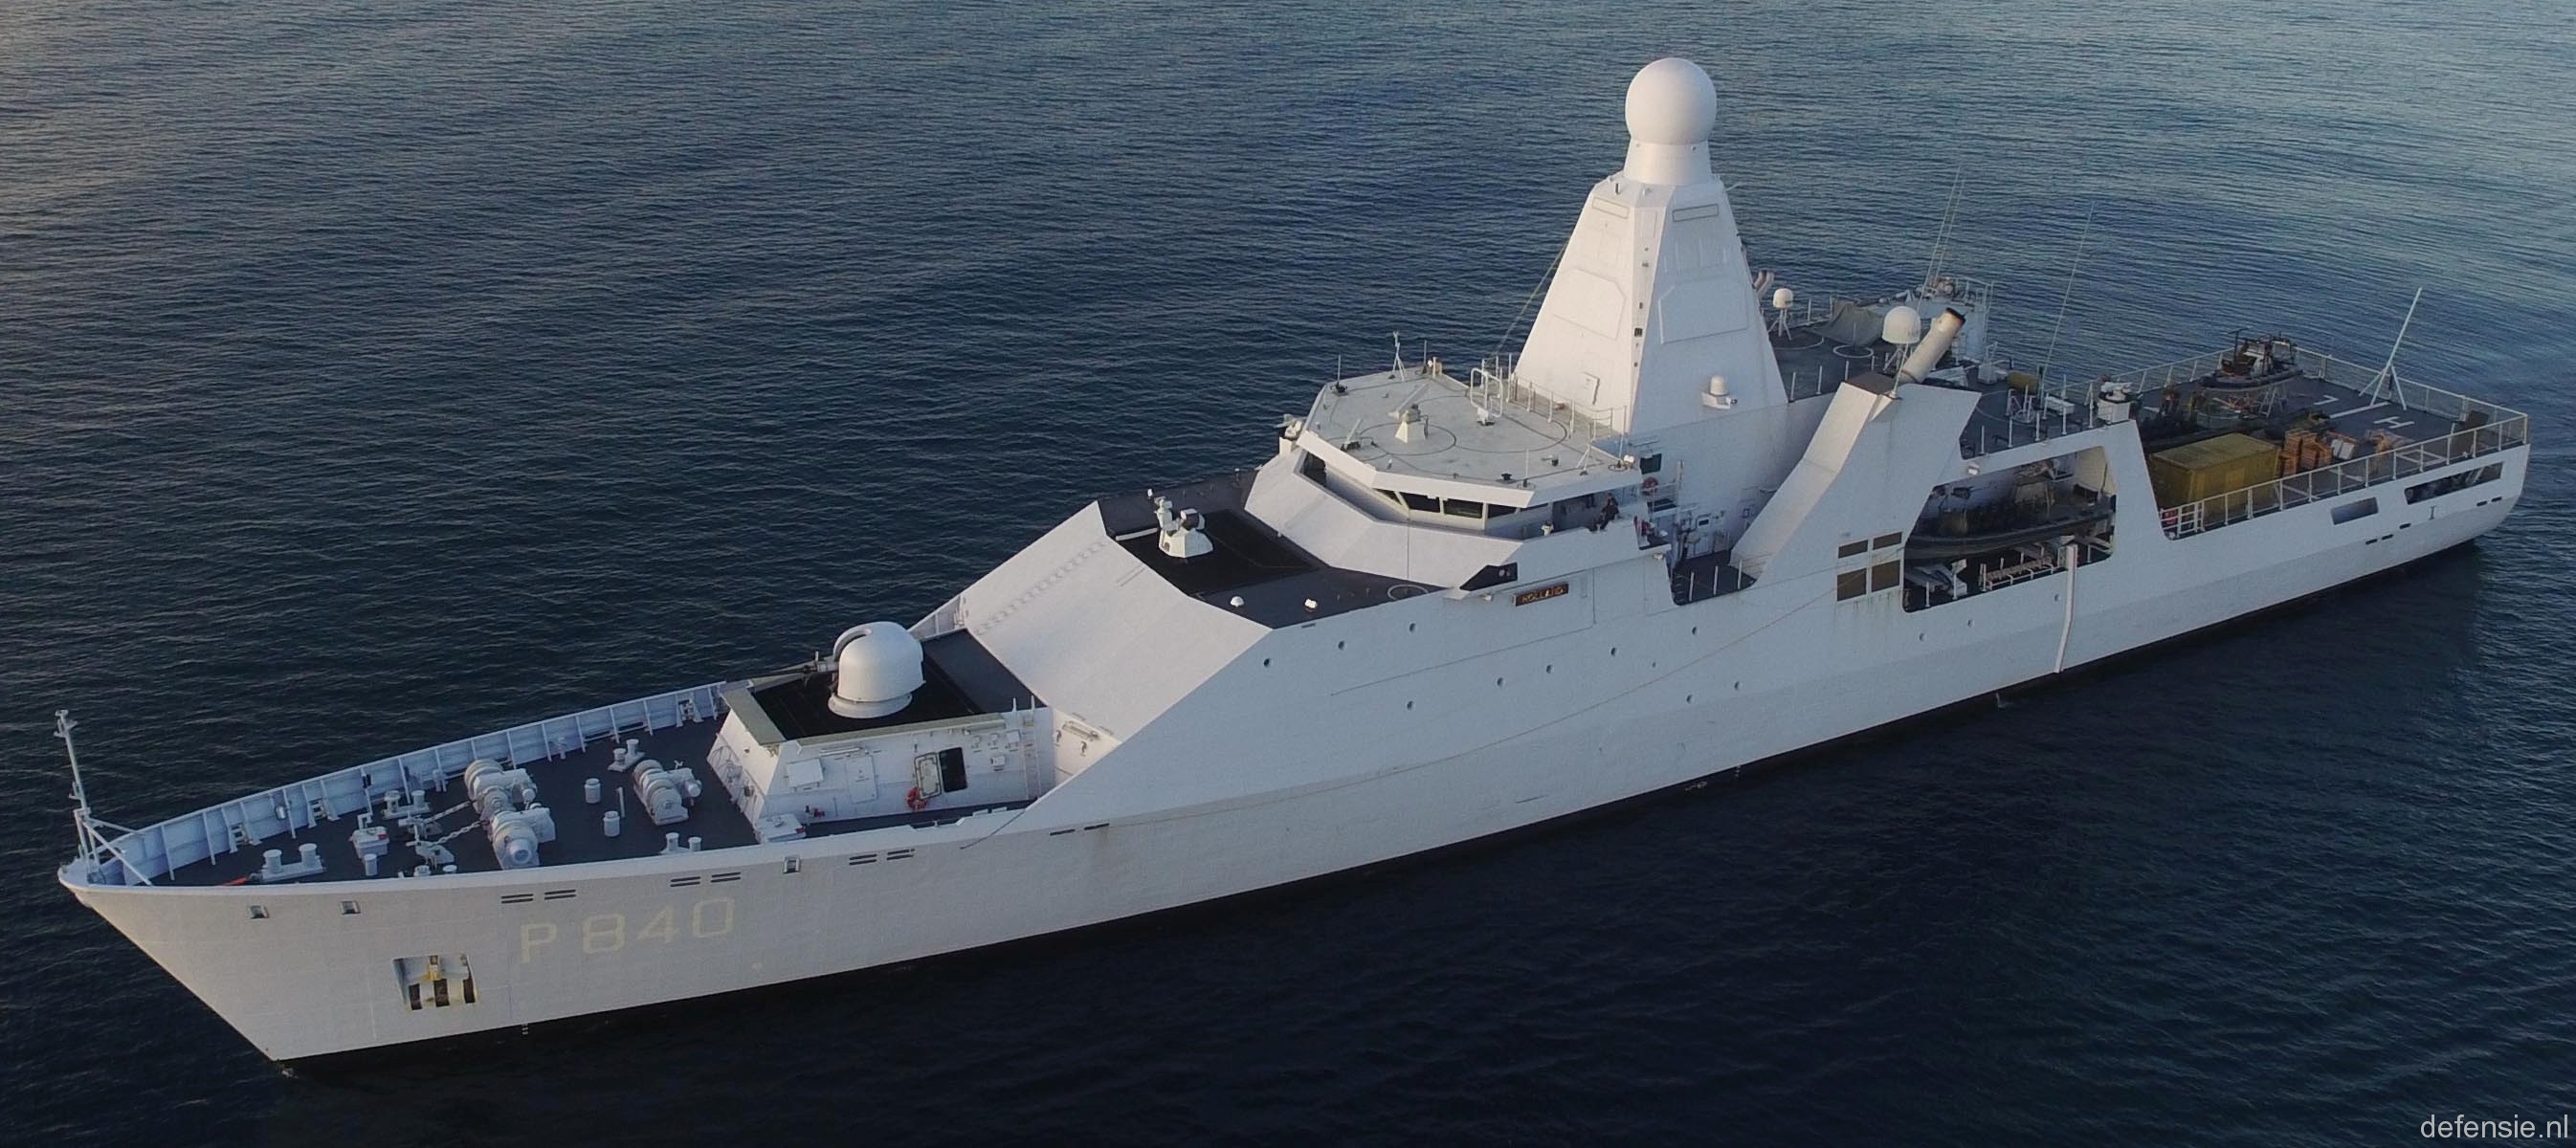 p-840 hnlms holland offshore patrol vessel opv royal netherlands navy 12 damen schelde shipbuilding